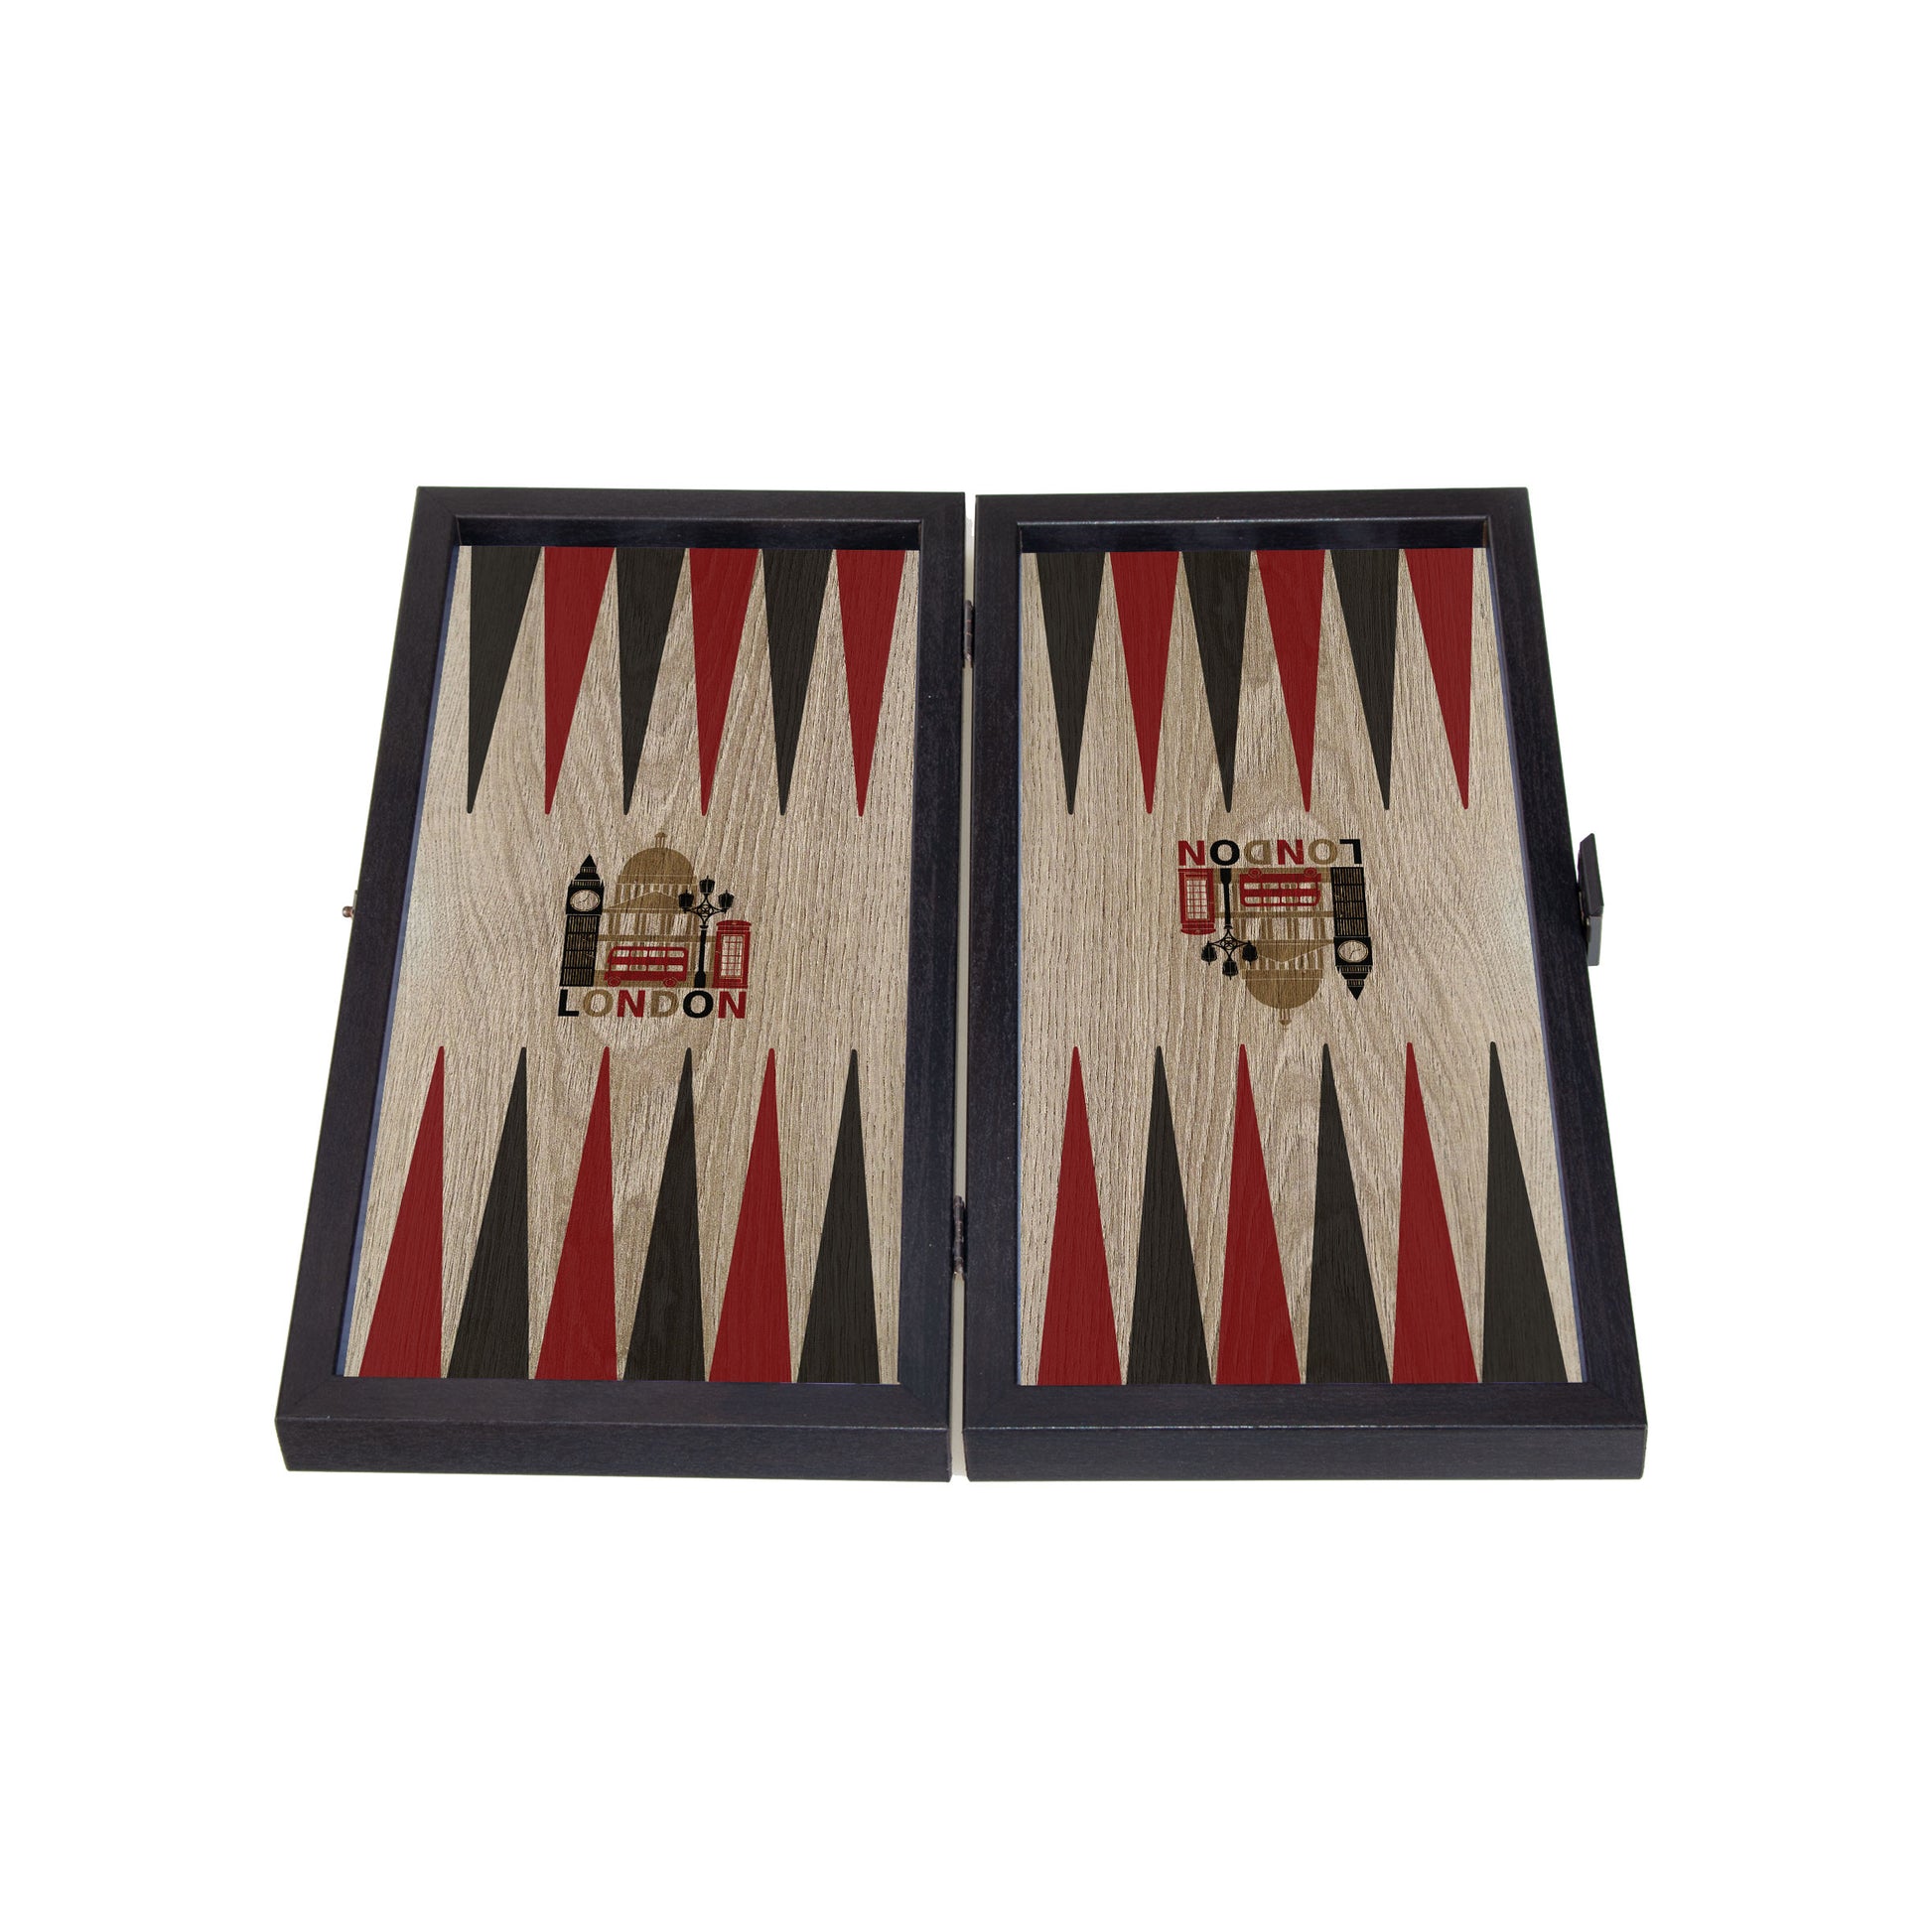 London Travel Size Backgammon Set - Portable and Stylish Design - Premium Backgammon from MANOPOULOS Chess & Backgammon - Just €39! Shop now at MANOPOULOS Chess & Backgammon